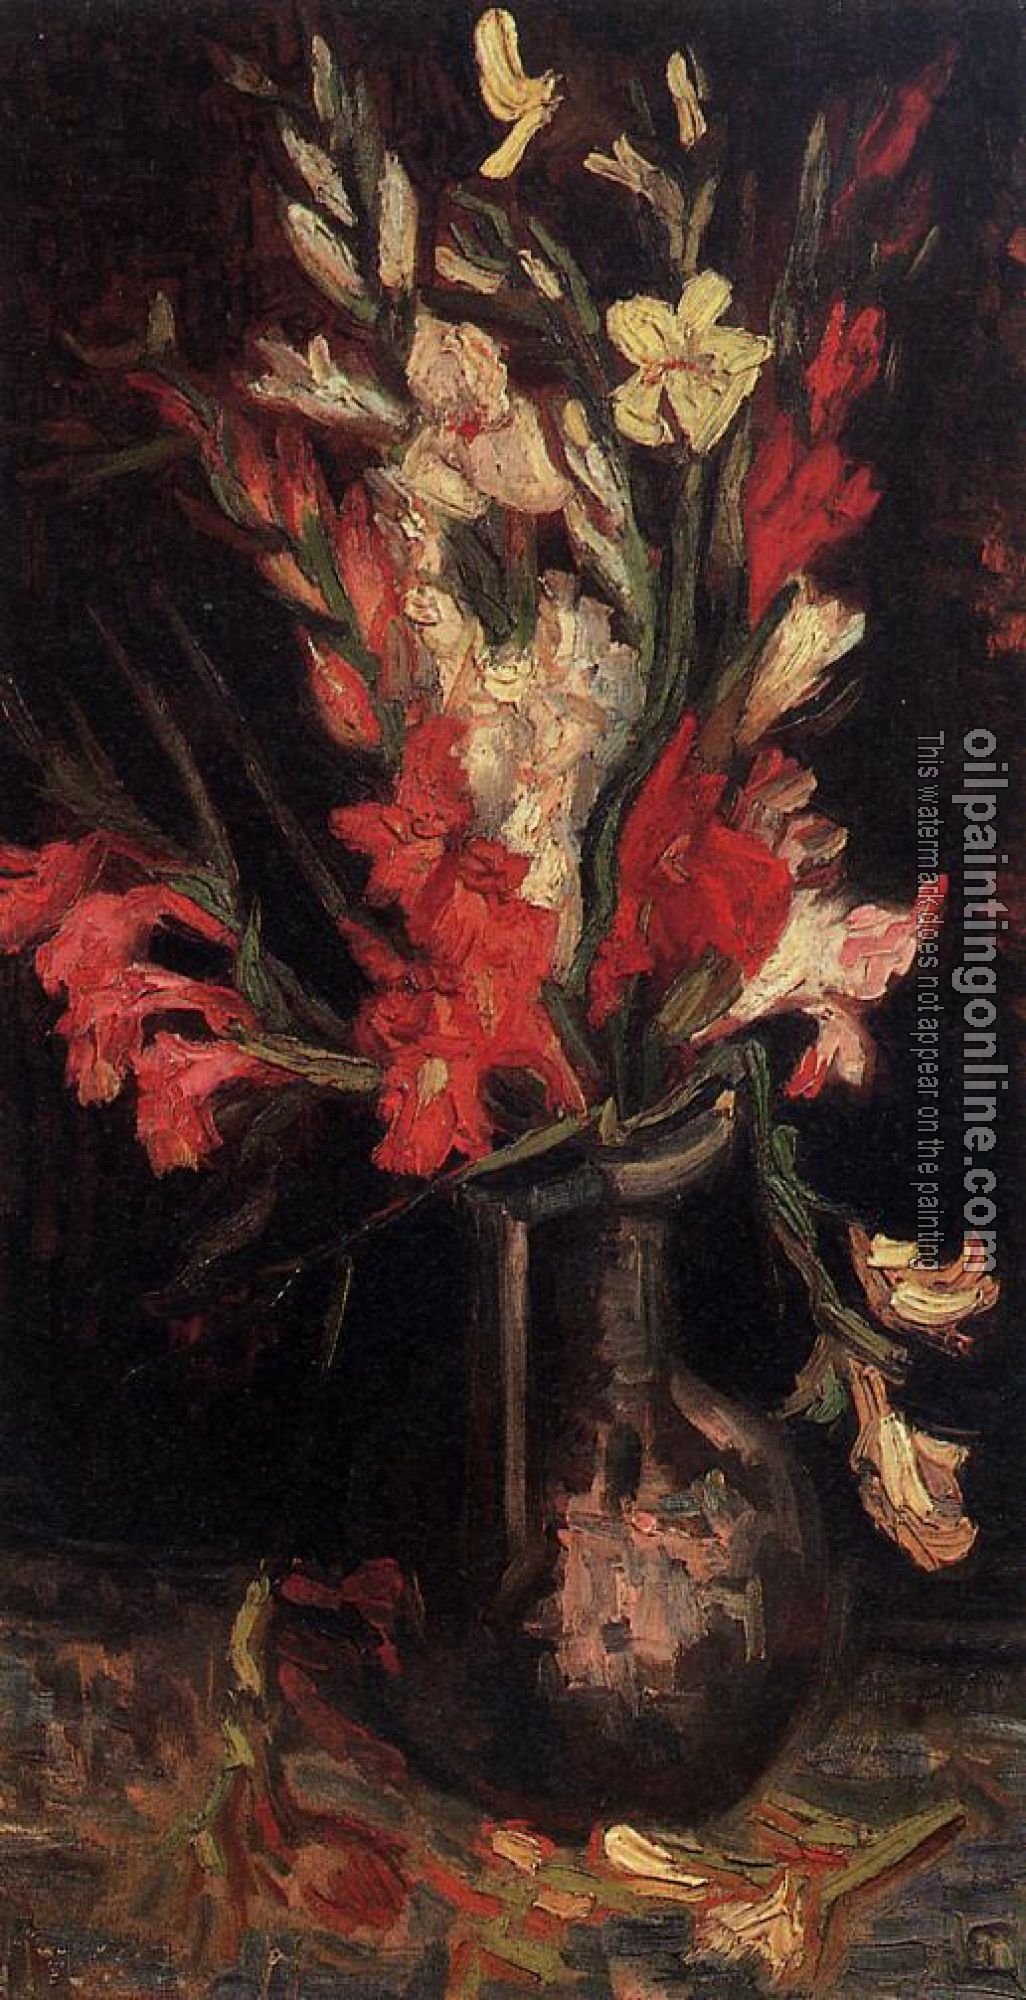 Gogh, Vincent van - Vase with Red Gladioli